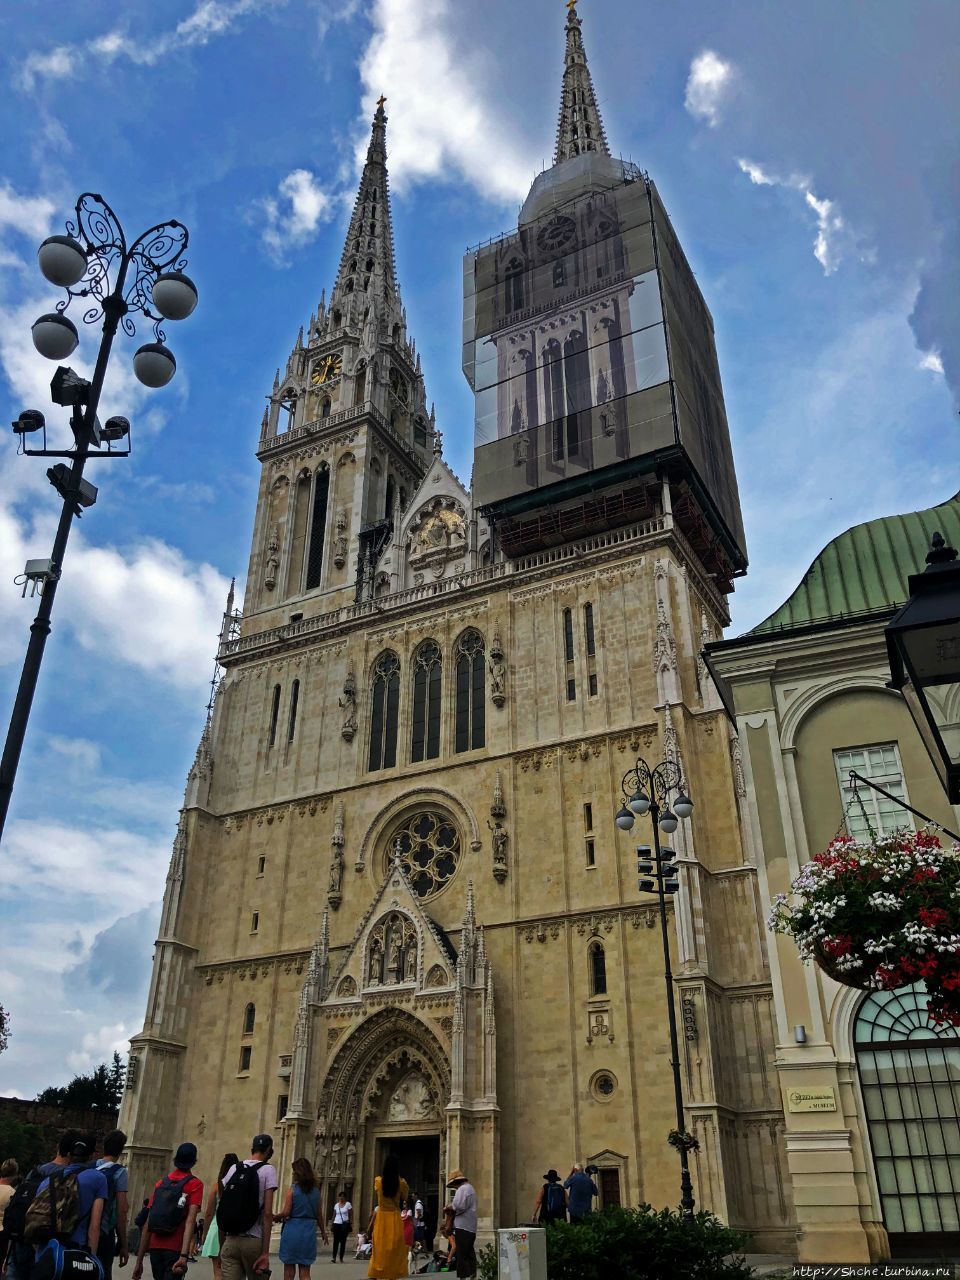 Zagrebačka katedrala - главный католический храм Хорватии